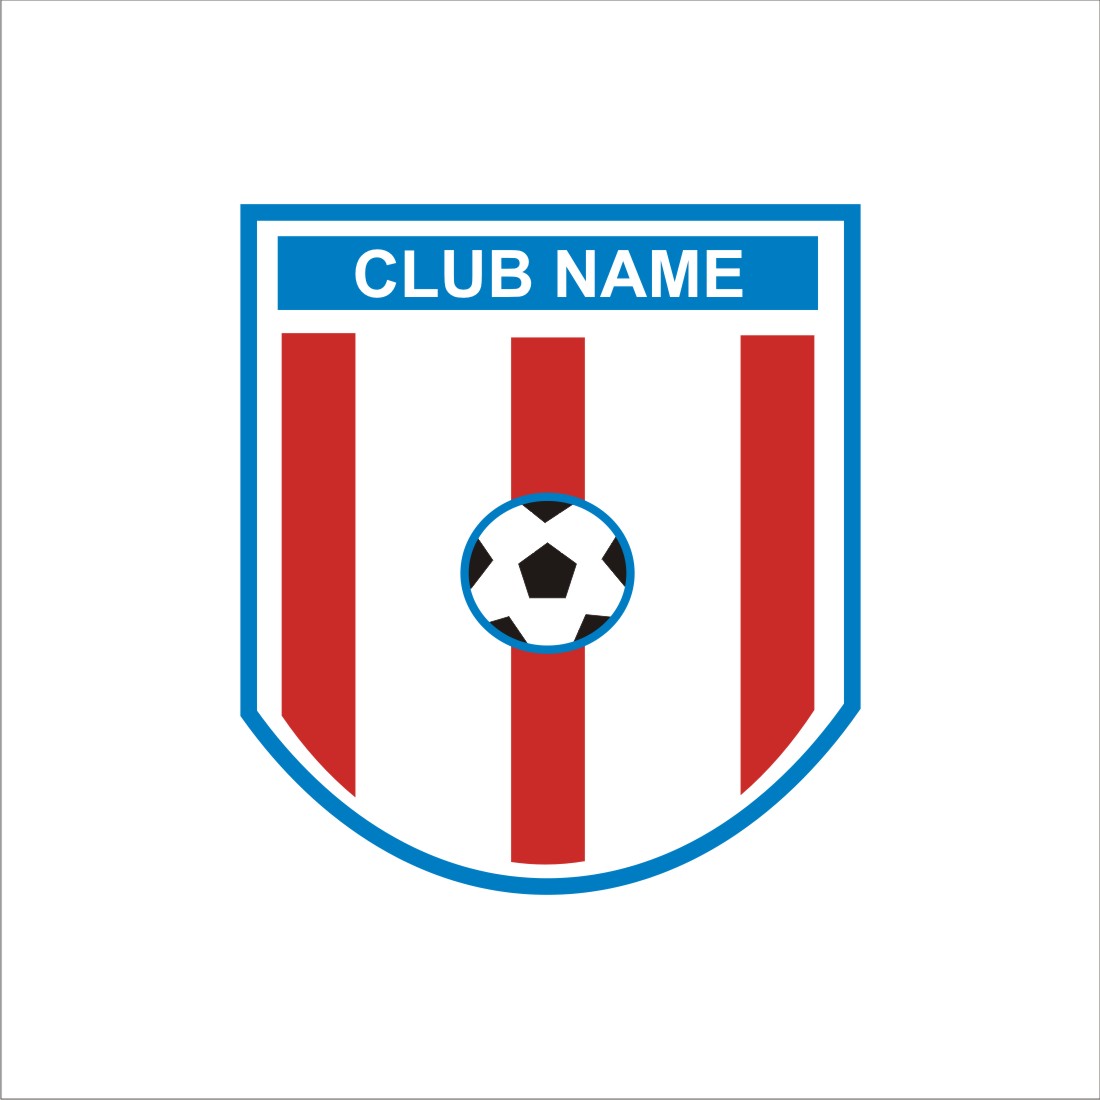 club logo preview image.